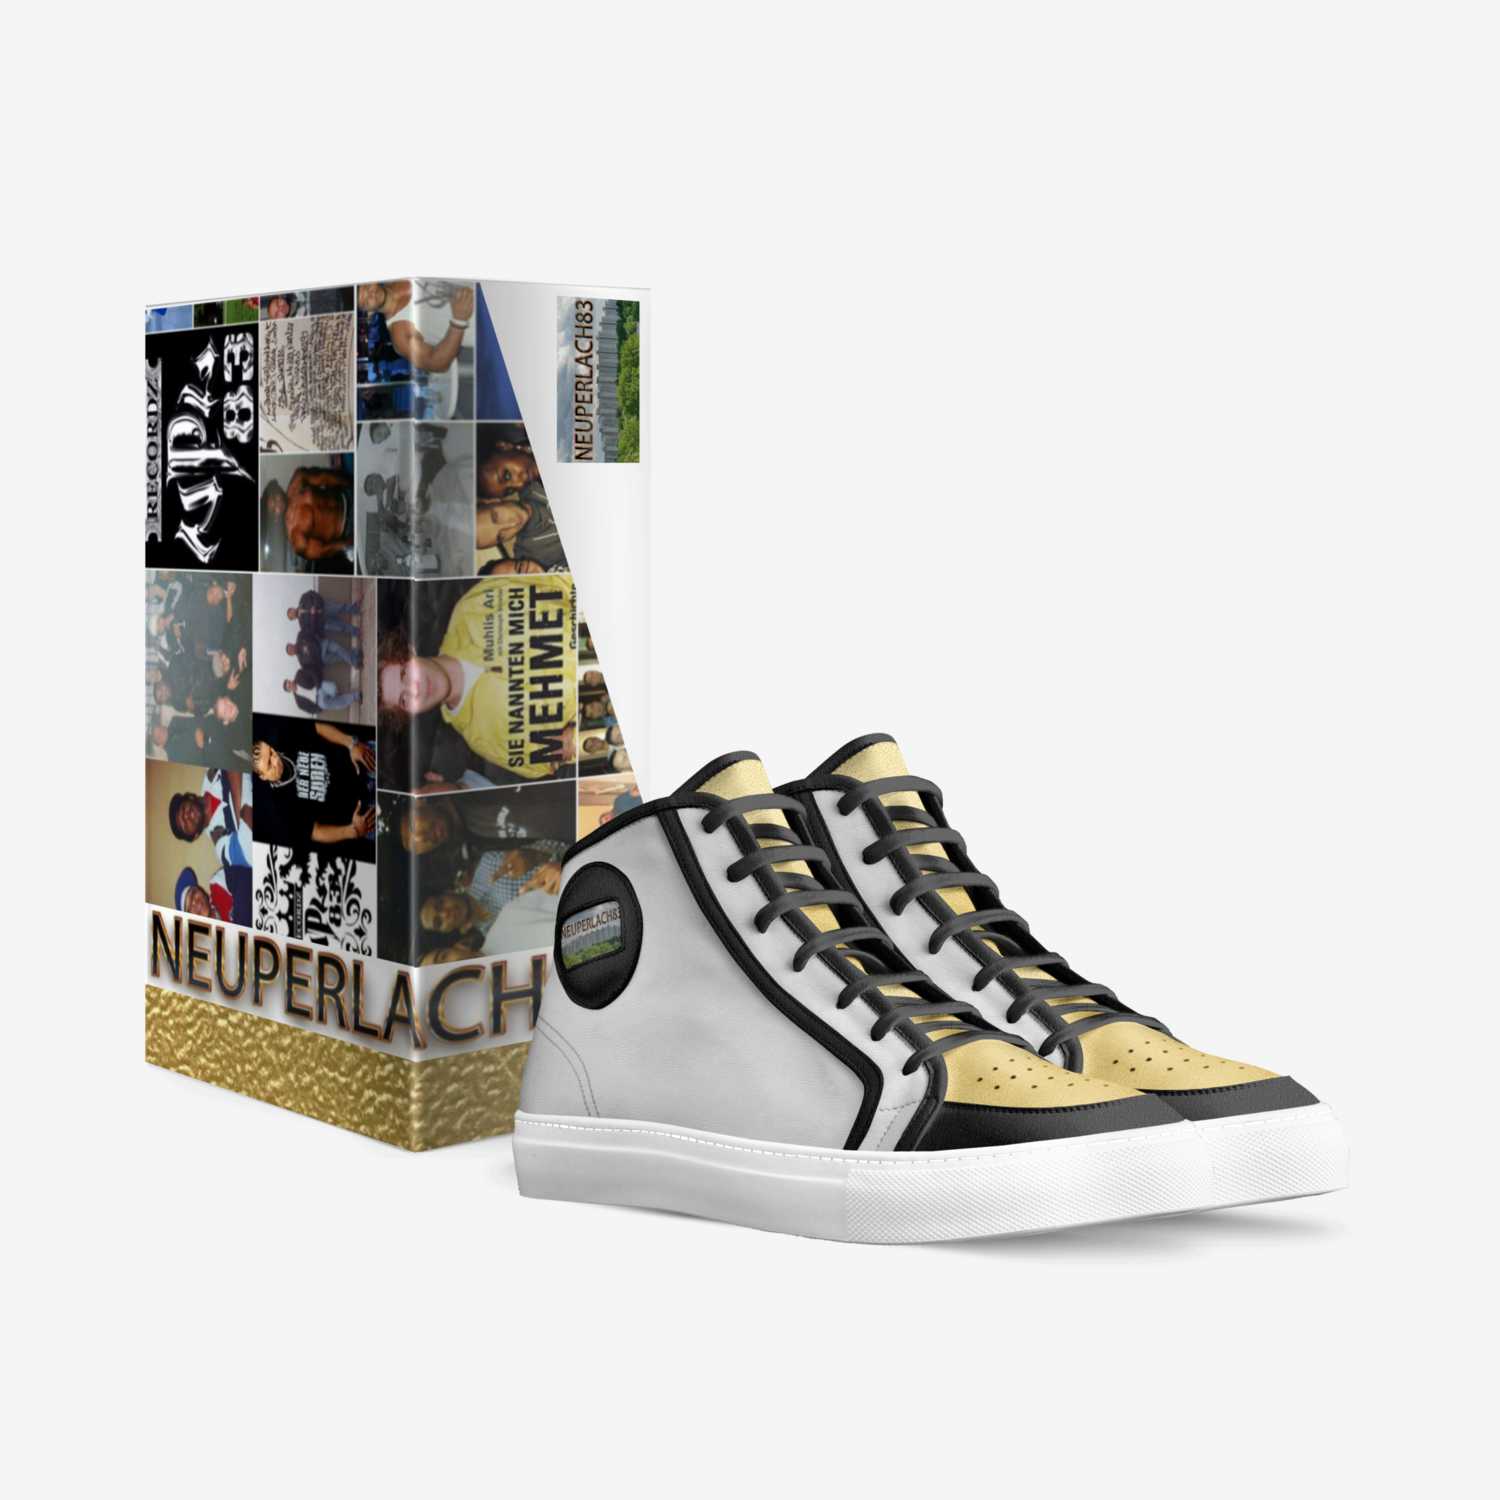 NEUPƏRLACH 83 custom made in Italy shoes by Juju & Najm Toomey | Box view